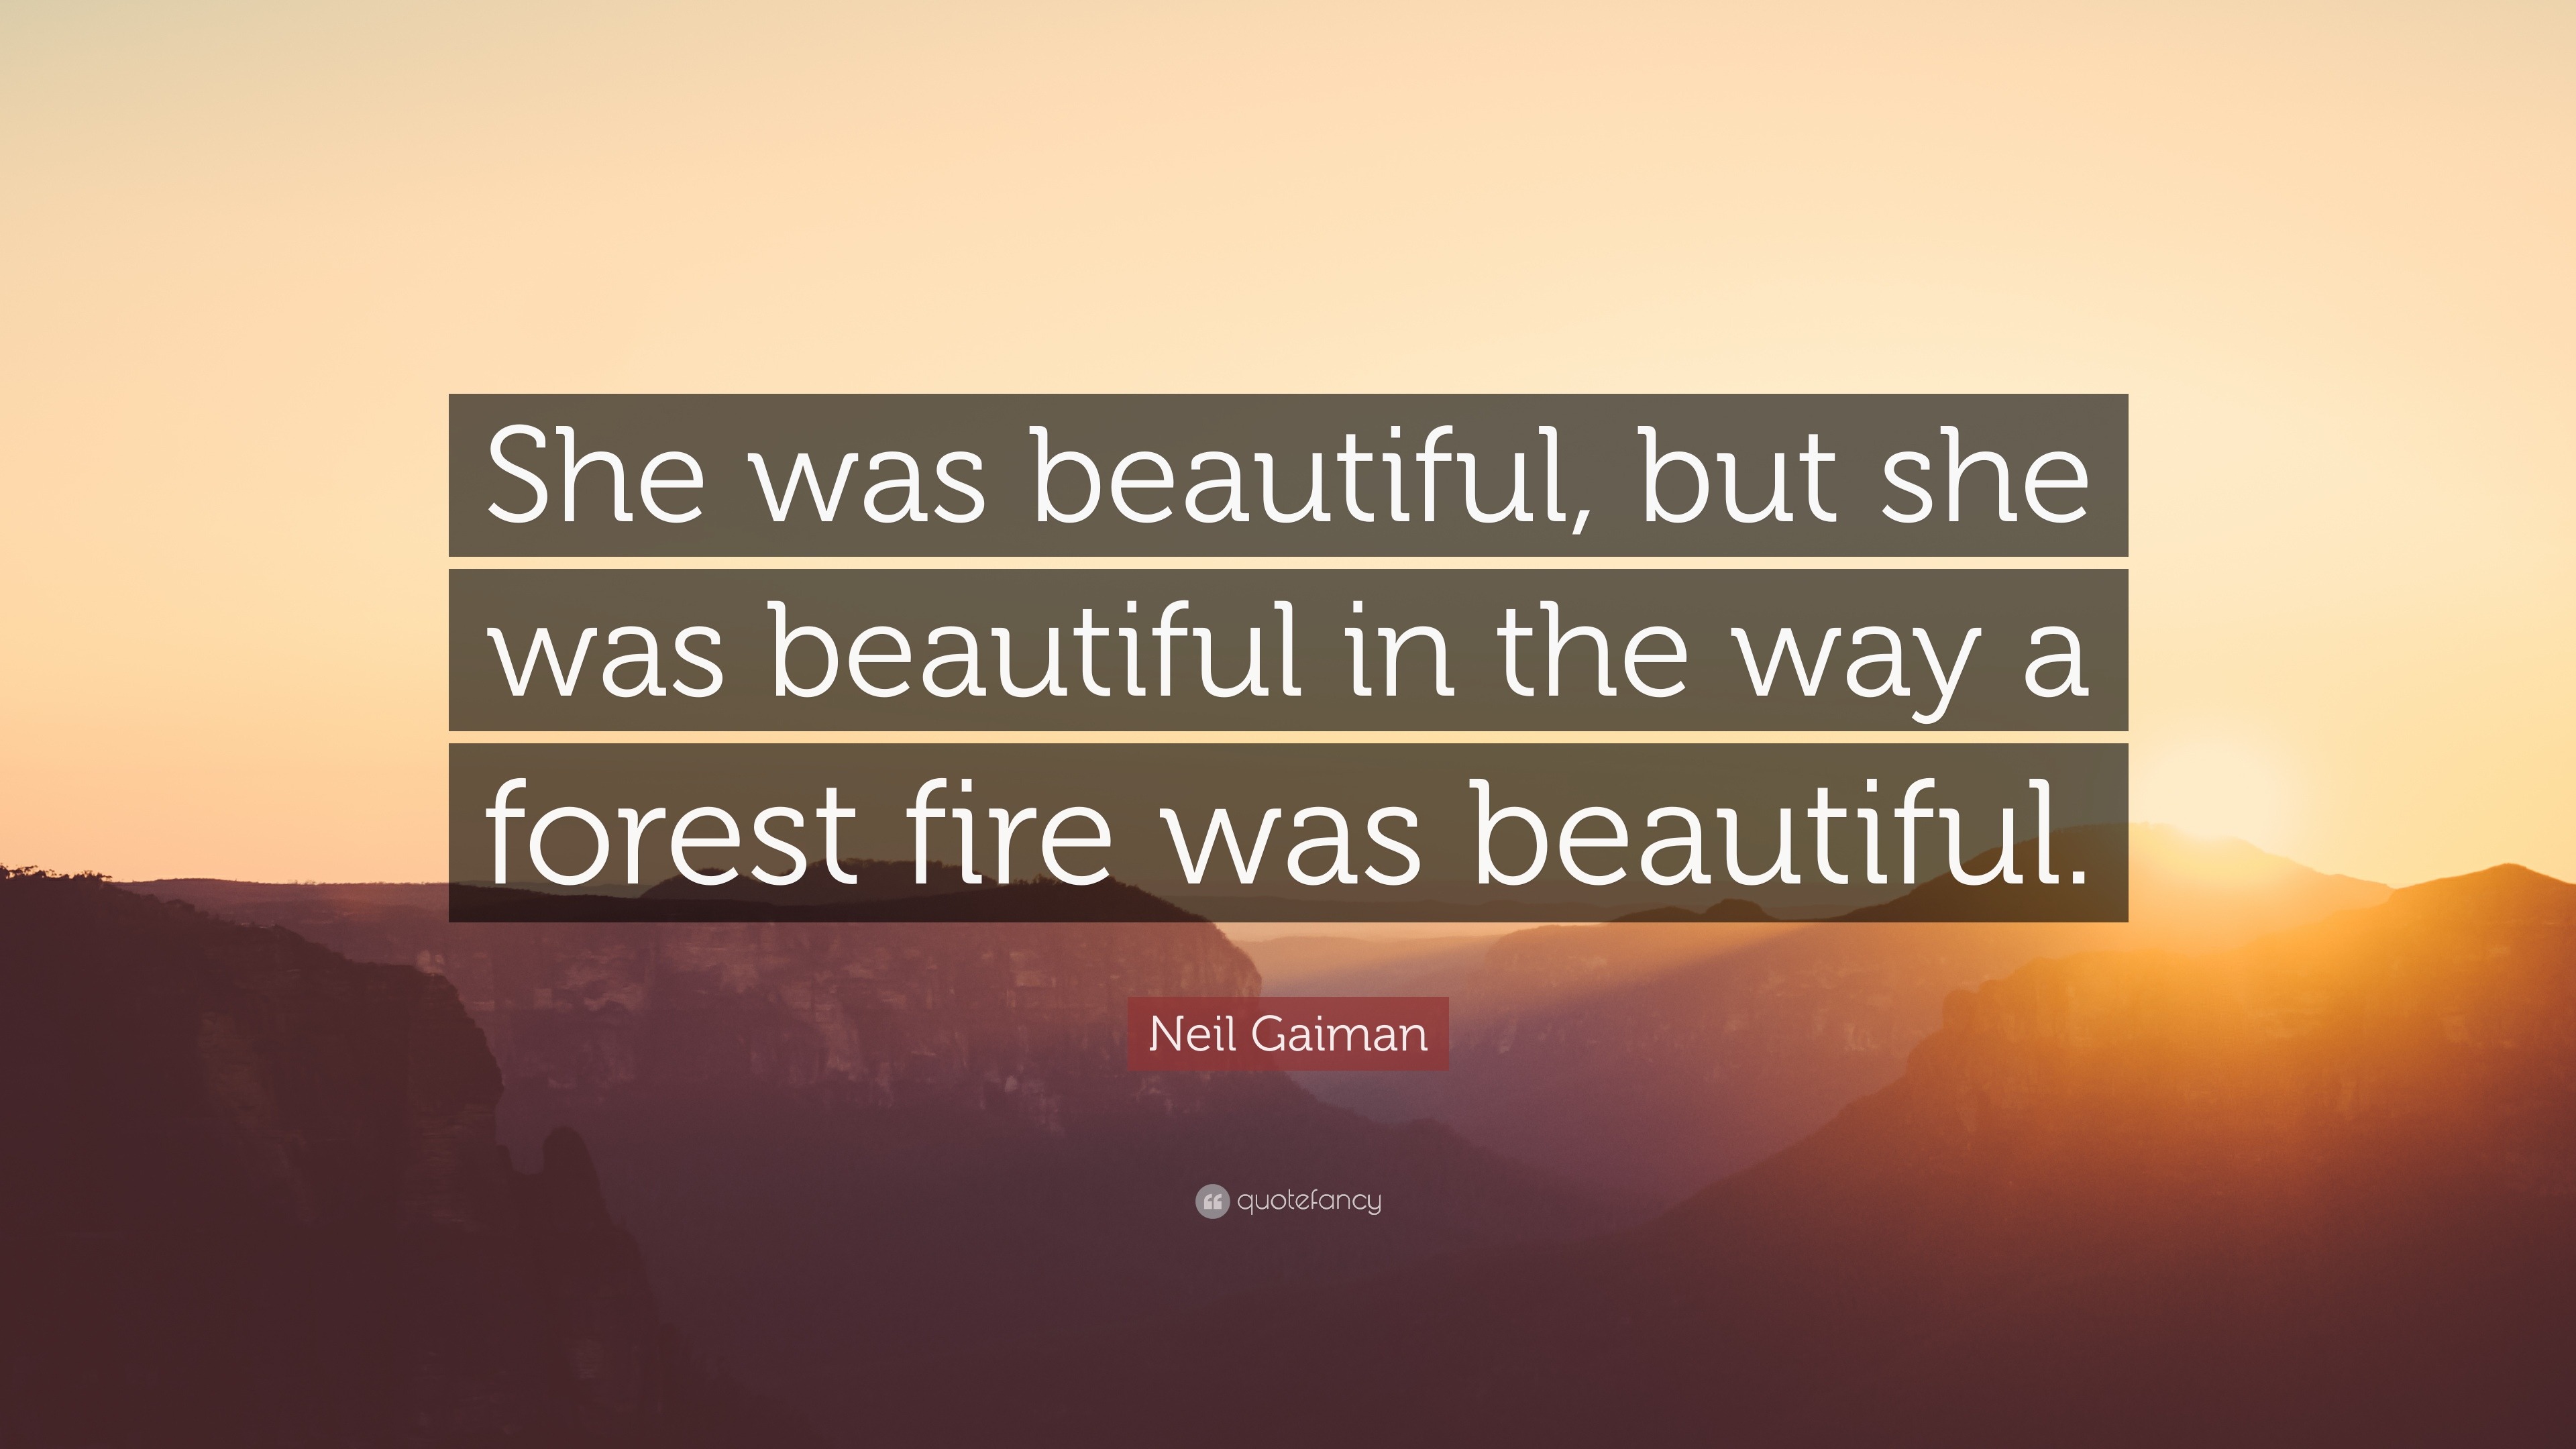 Neil Gaiman Quote She Was Beautiful But She Was Beautiful In The Way A Forest Fire Was Beautiful 12 Wallpapers Quotefancy